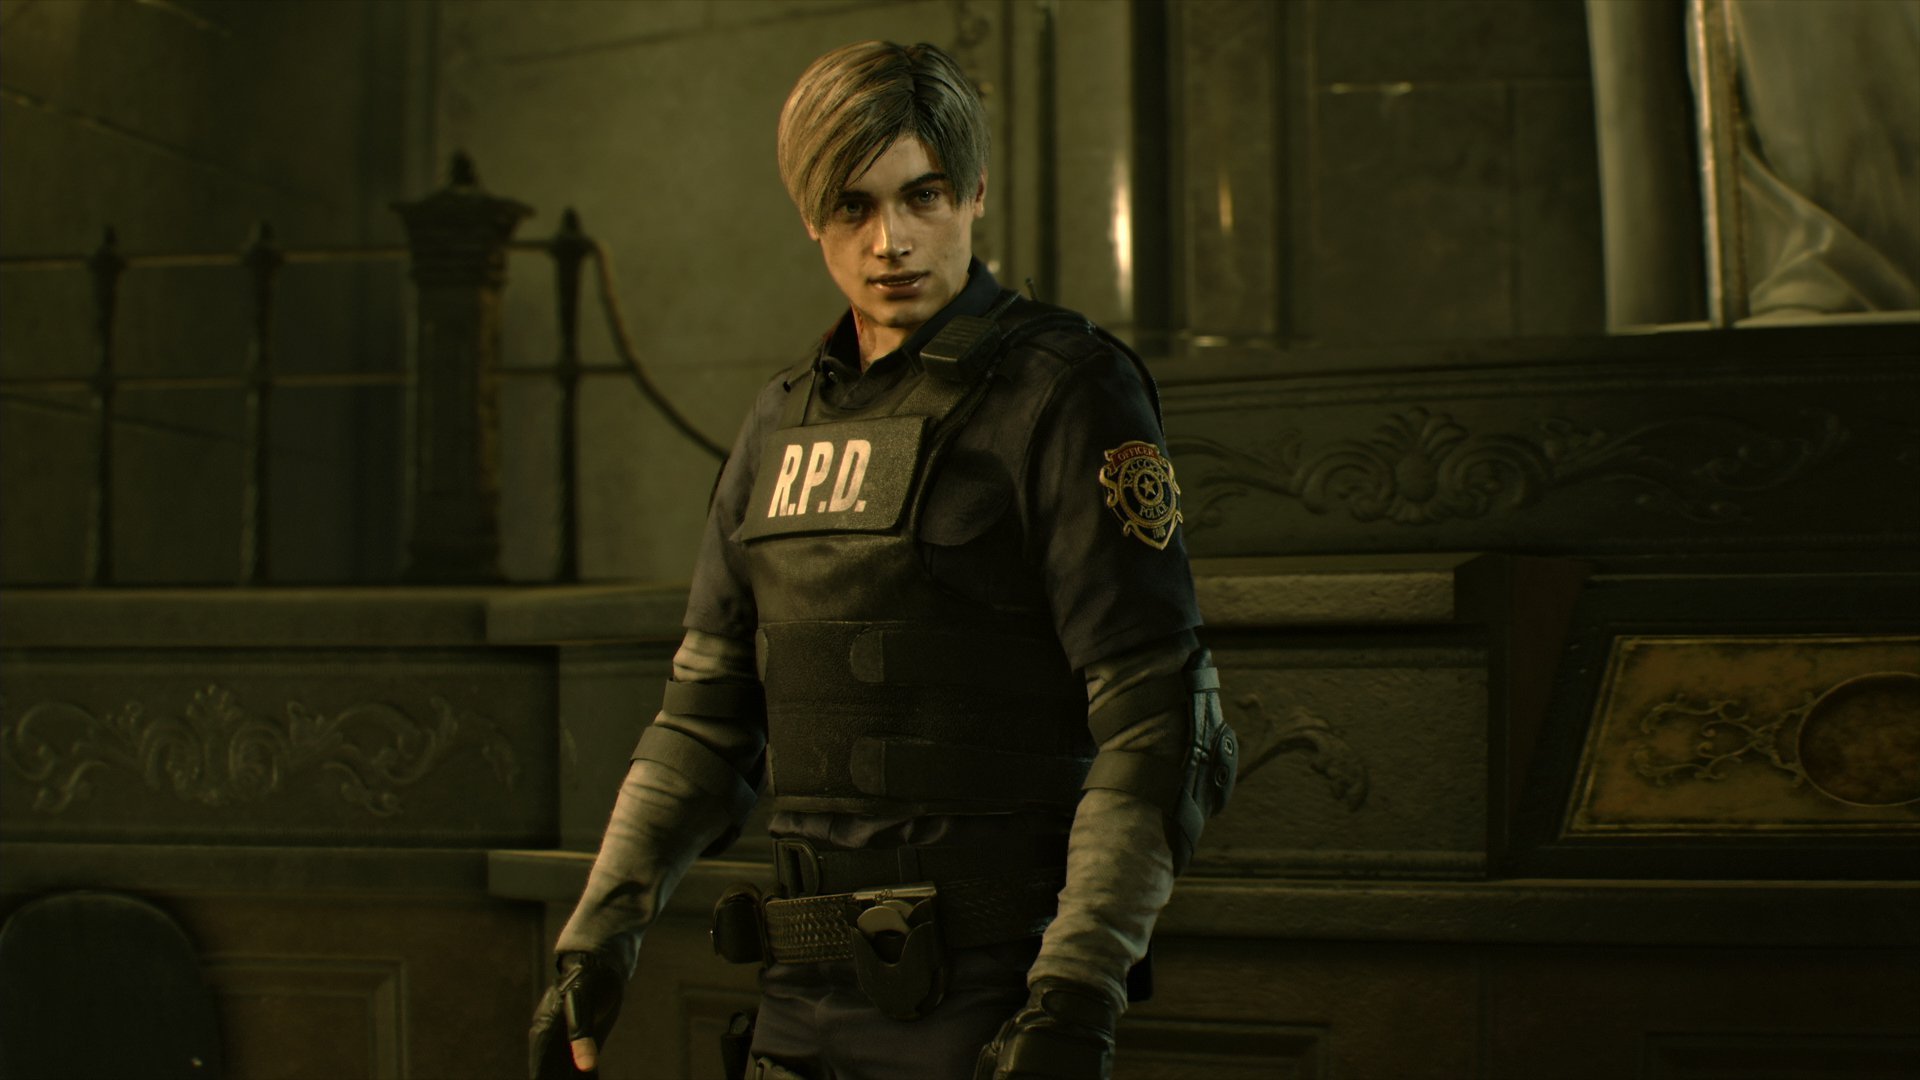 Baixar papel de parede para celular de Resident Evil, Videogame, Leon S Kennedy, Resident Evil 2 (2019) gratuito.